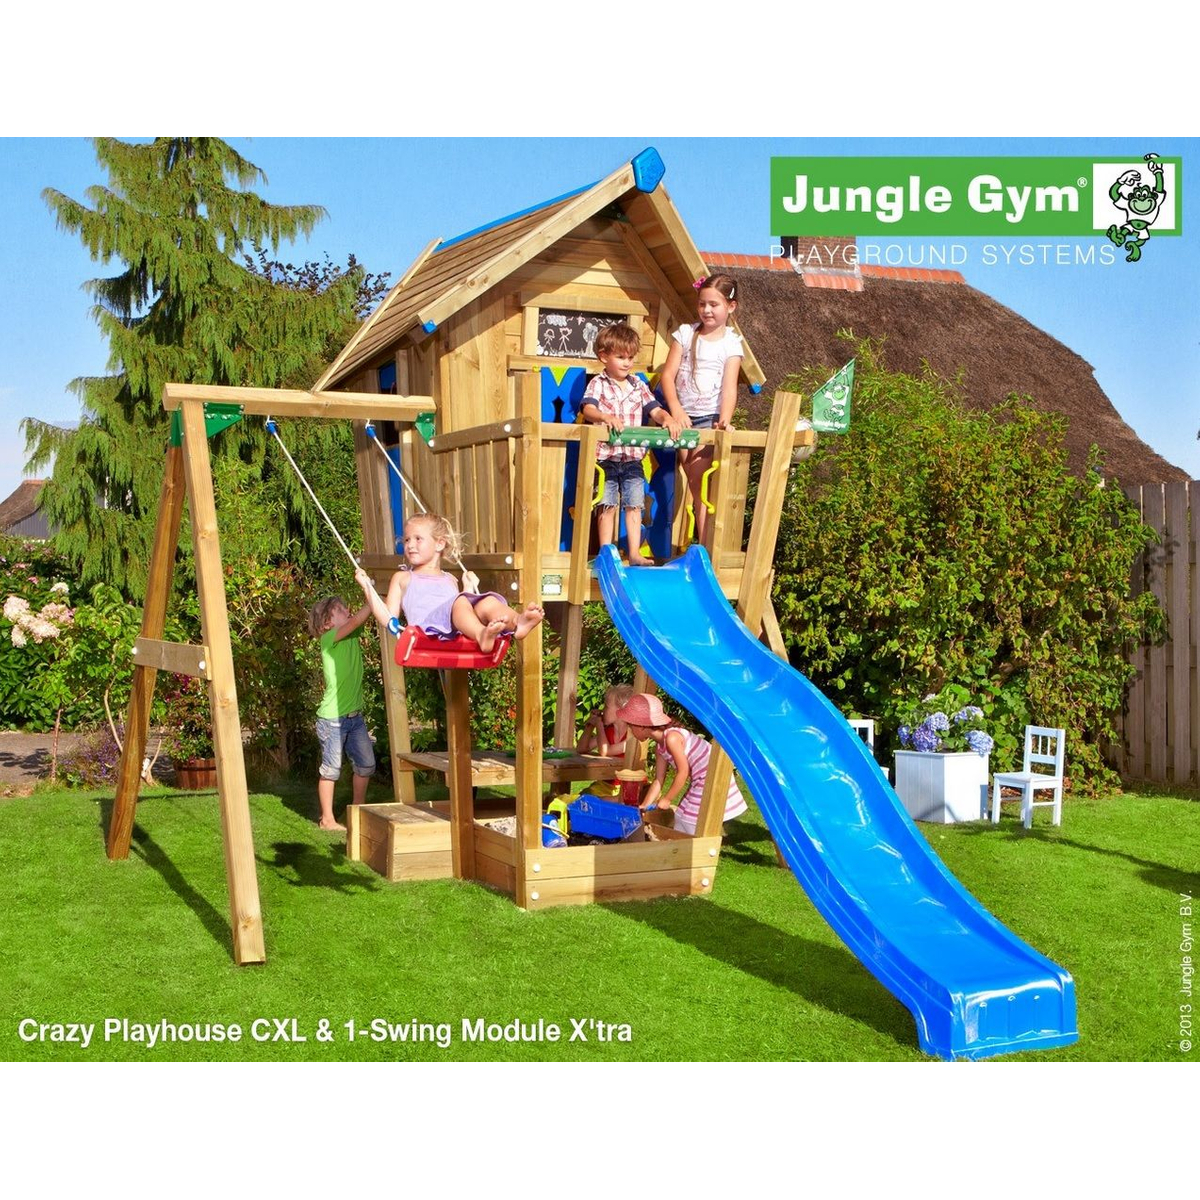 Jungle Gym 1-Swing Module X'tra